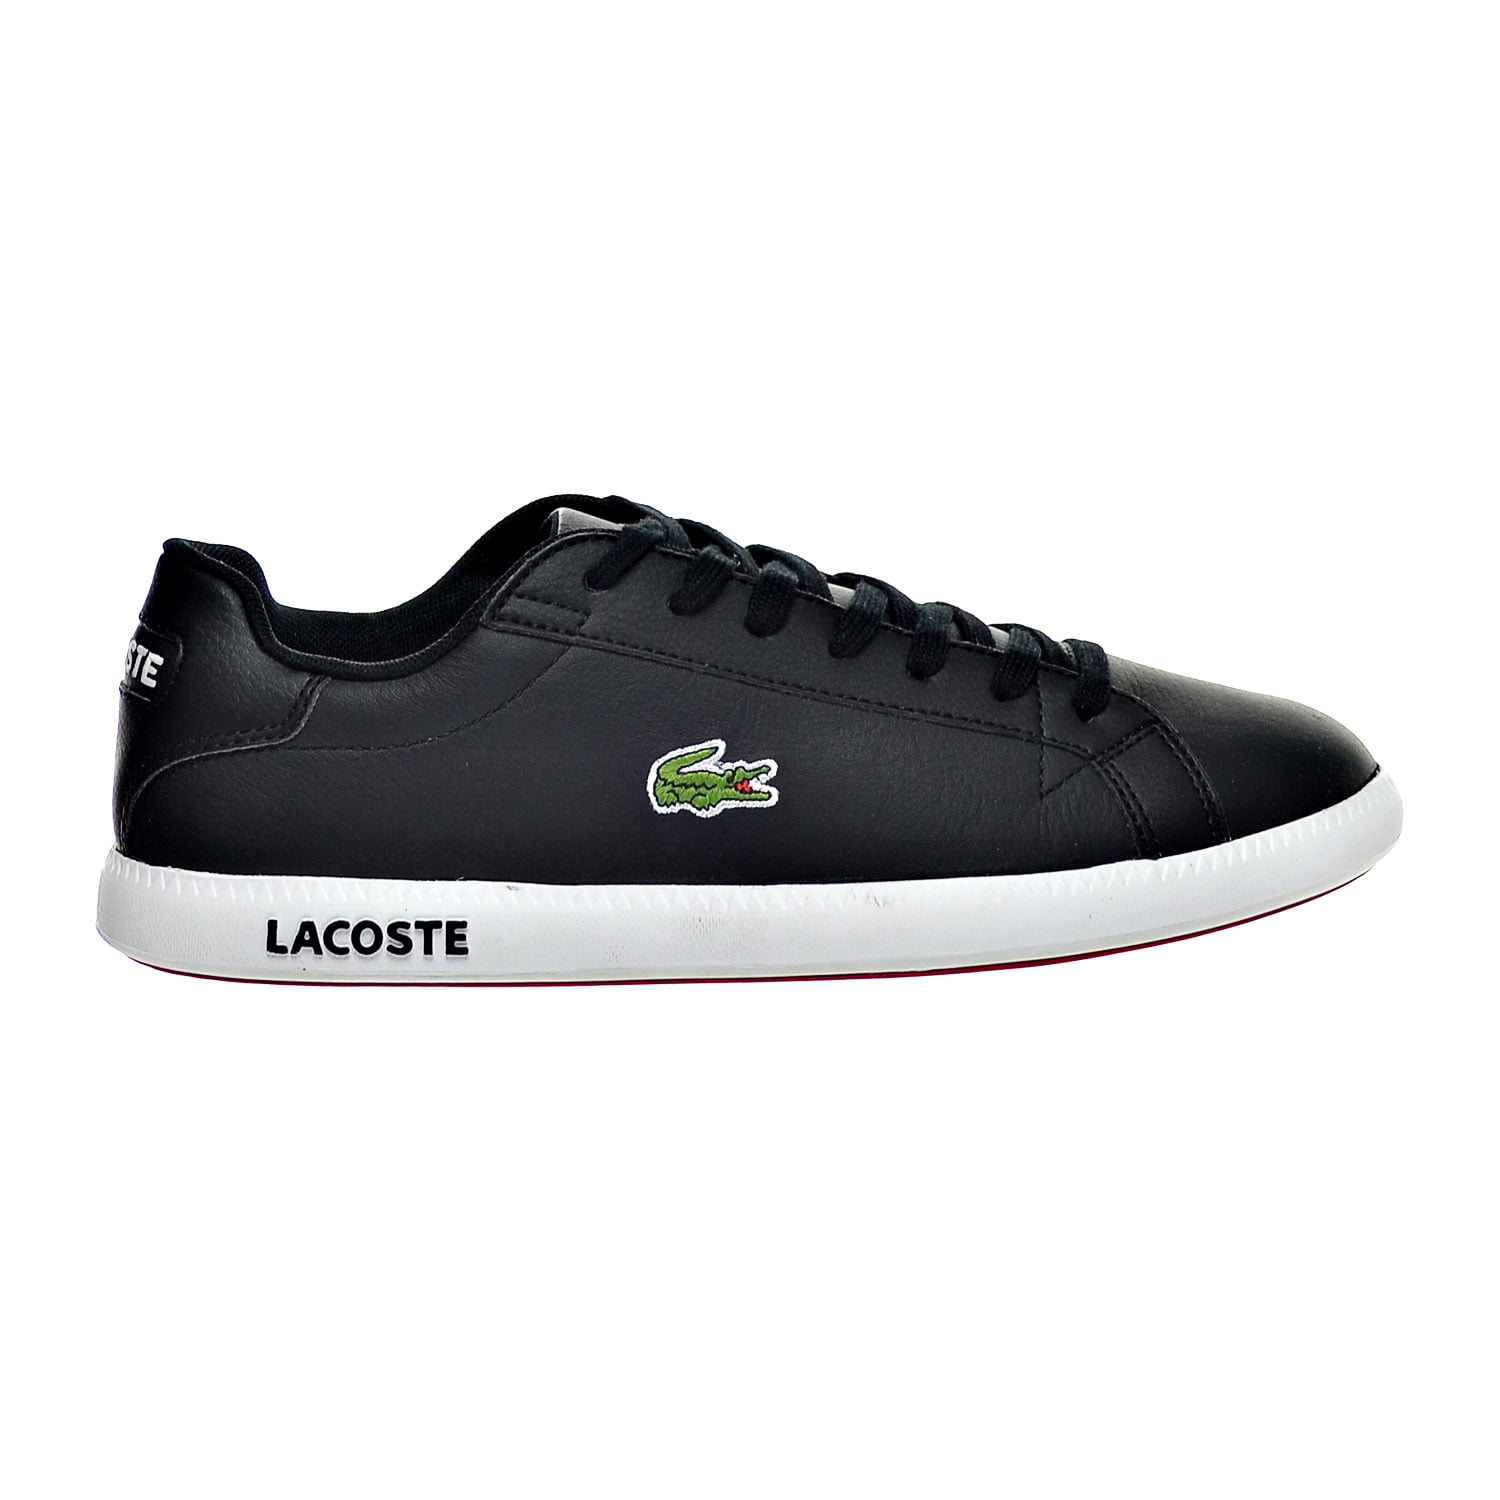 Lacoste Graduate LCR3 SPM Leather/Synthetic Men's Black/White 7-31spm0096-02h Walmart.com